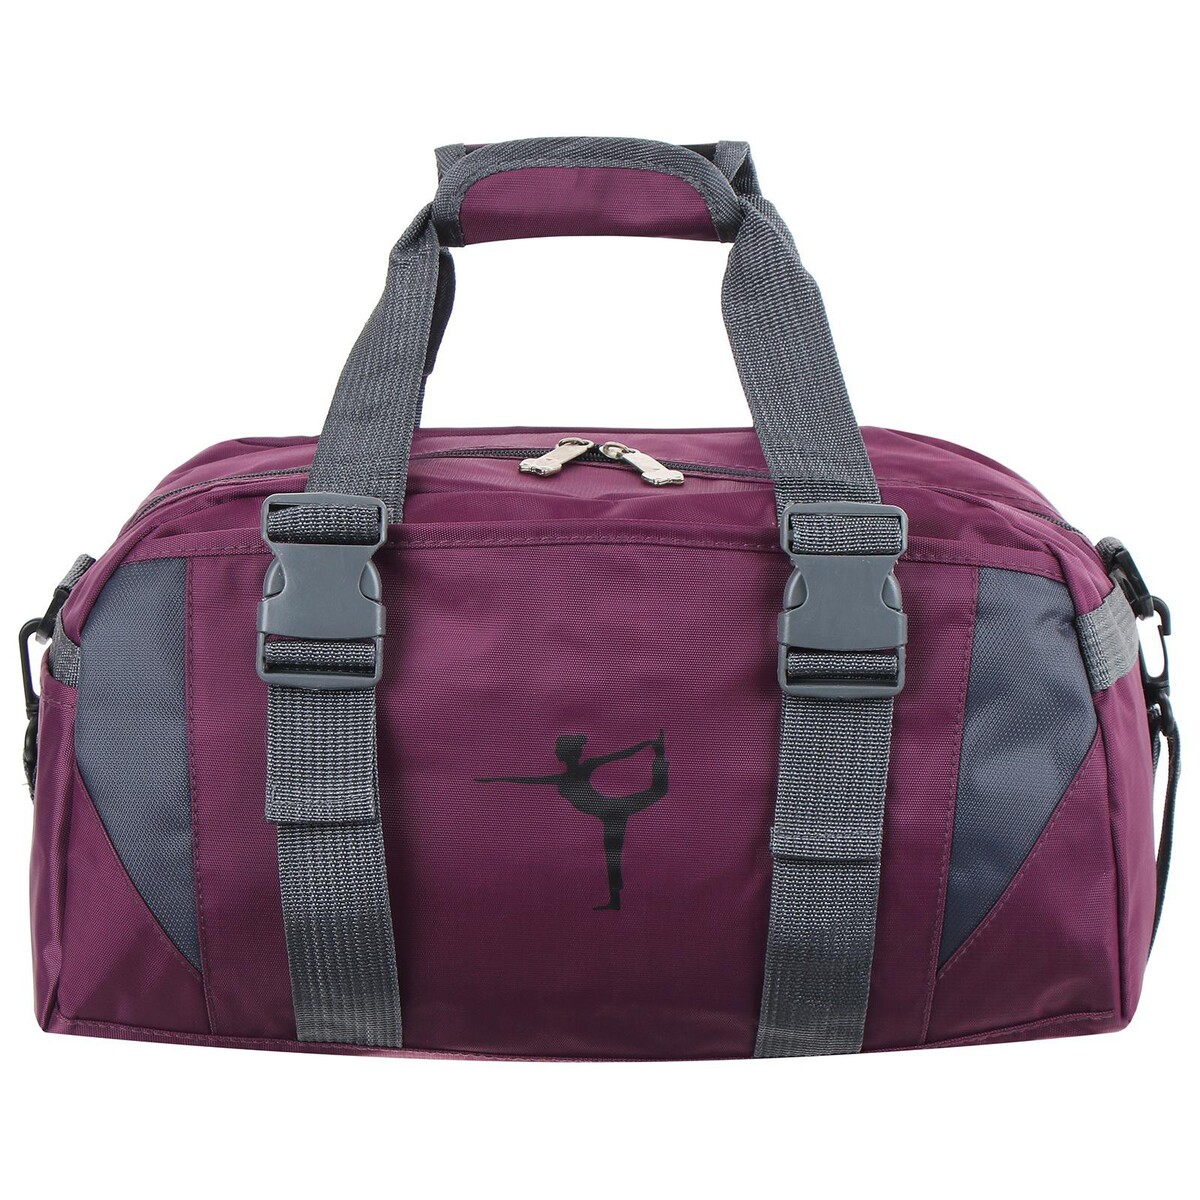 Сумка для йоги и гимнастики sangh, 37х20х20 см, цвет фиолетовый сумка для йоги и гимнастики sangh 37х20х20 см зеленый